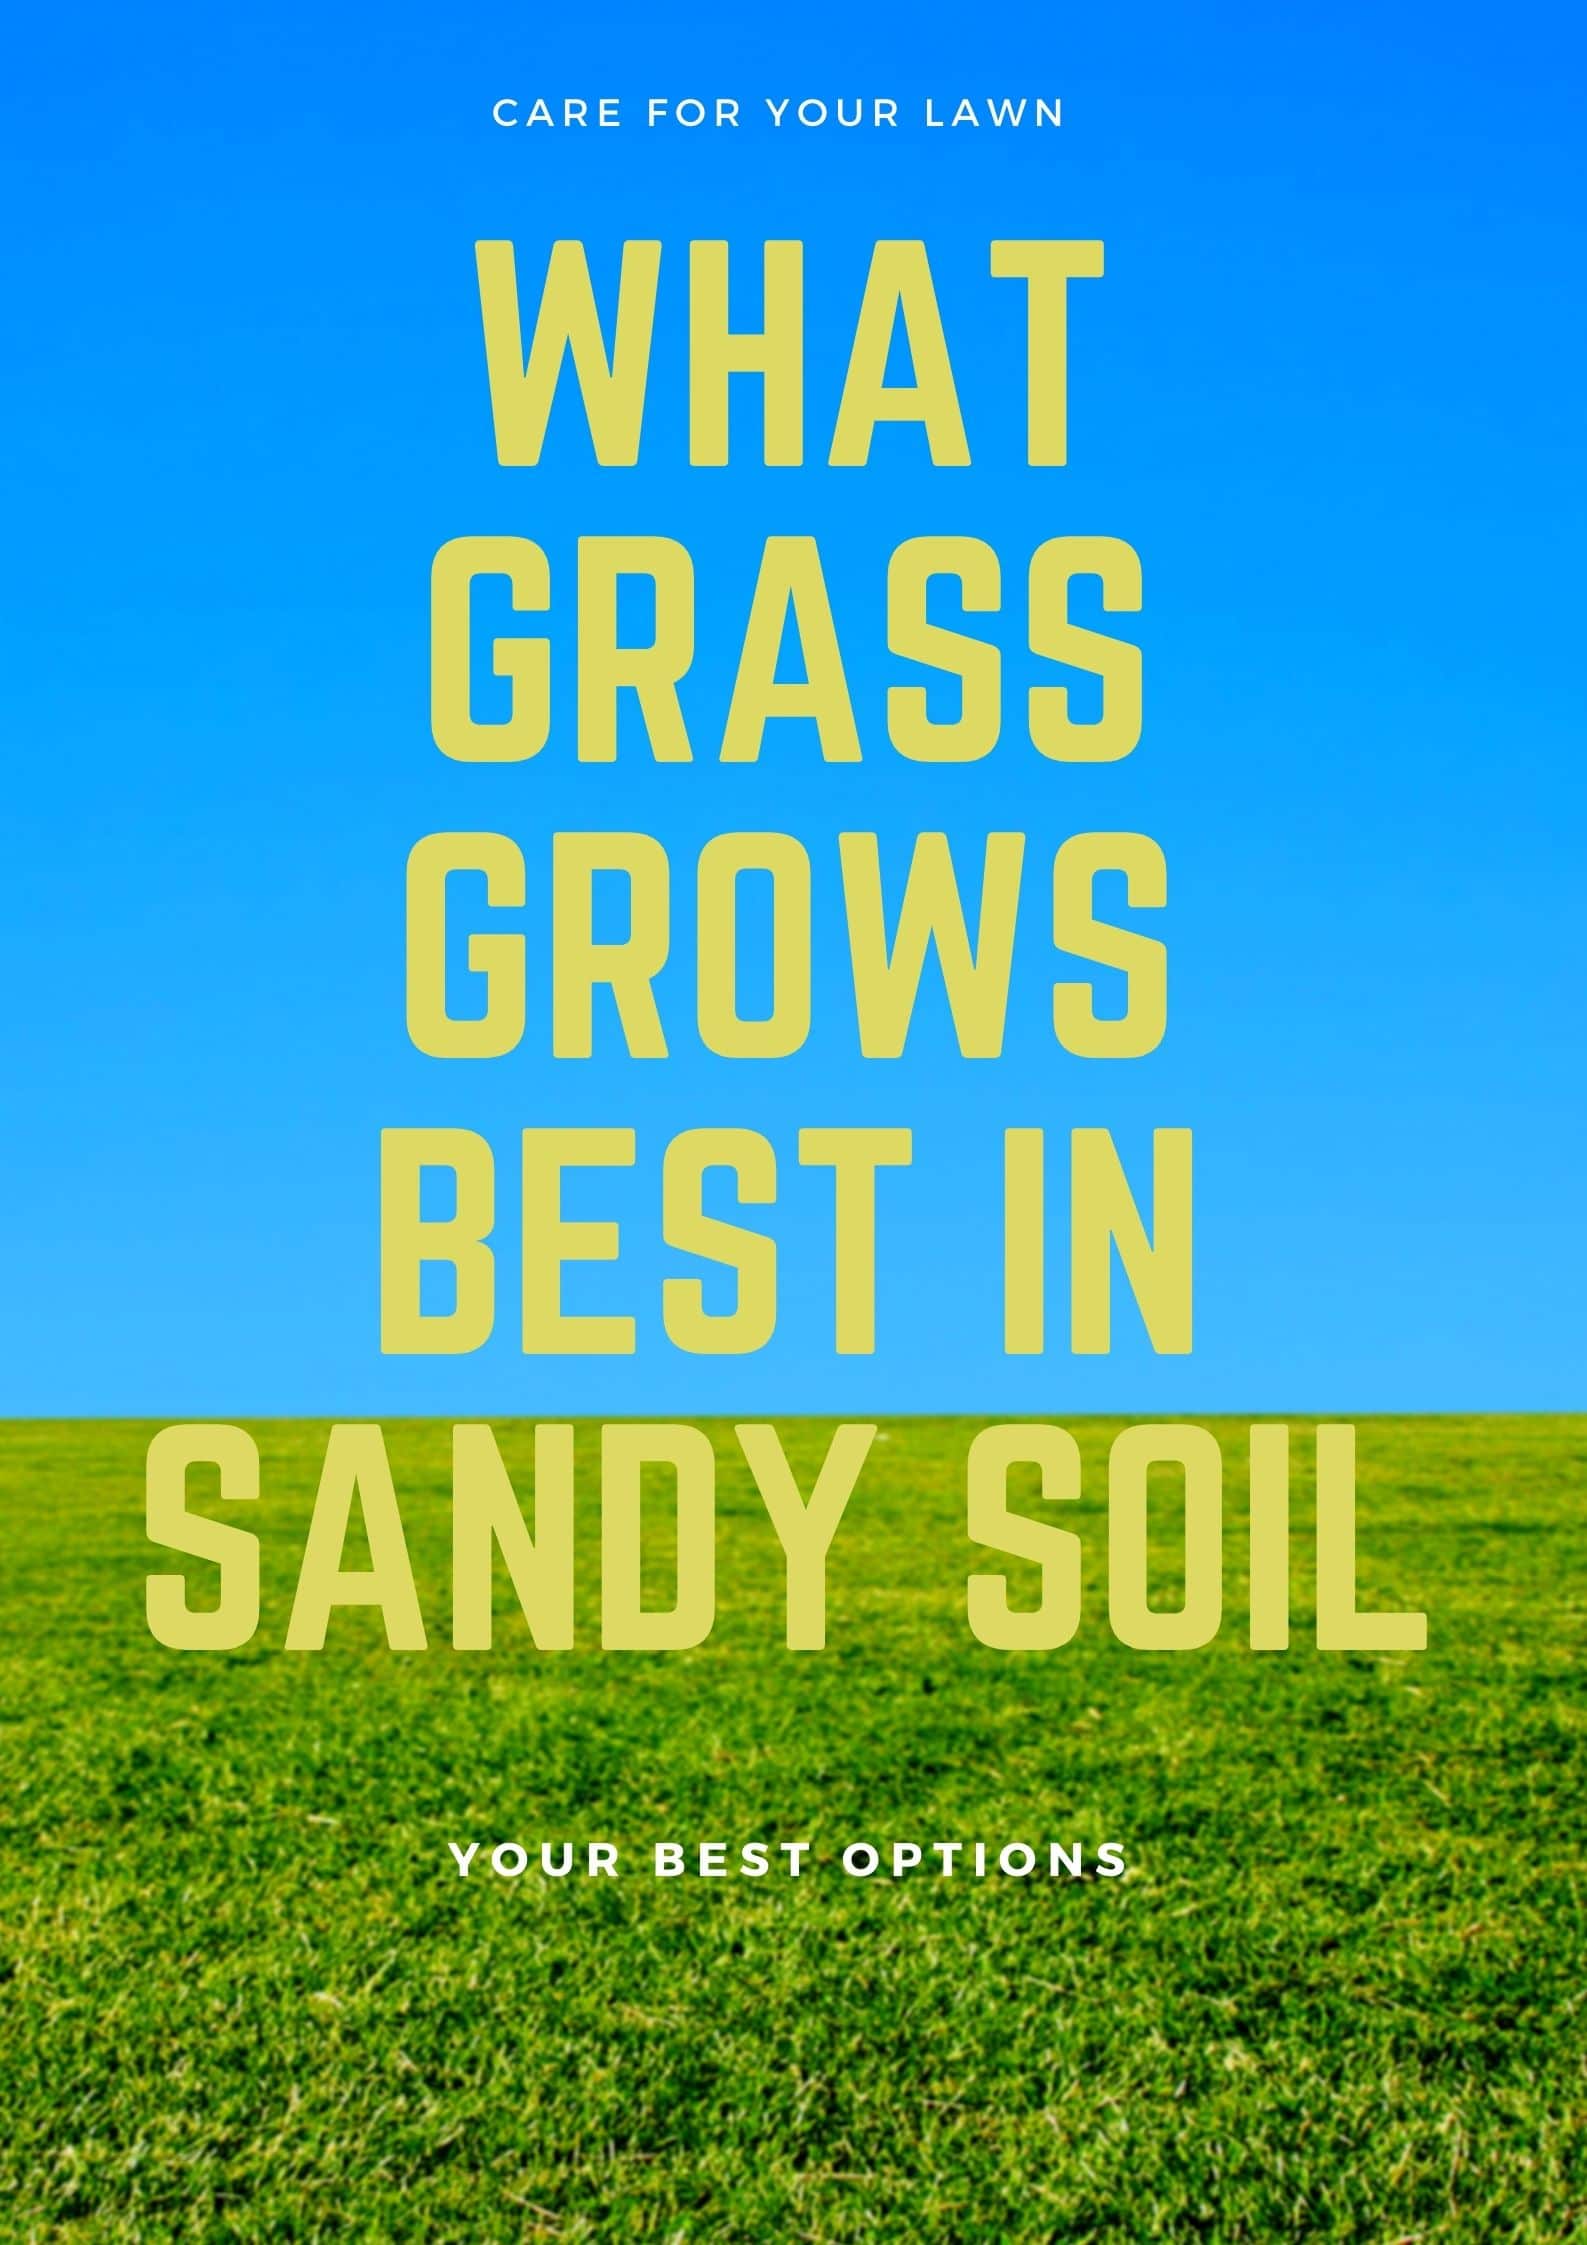 what grass grows best in sandy soil